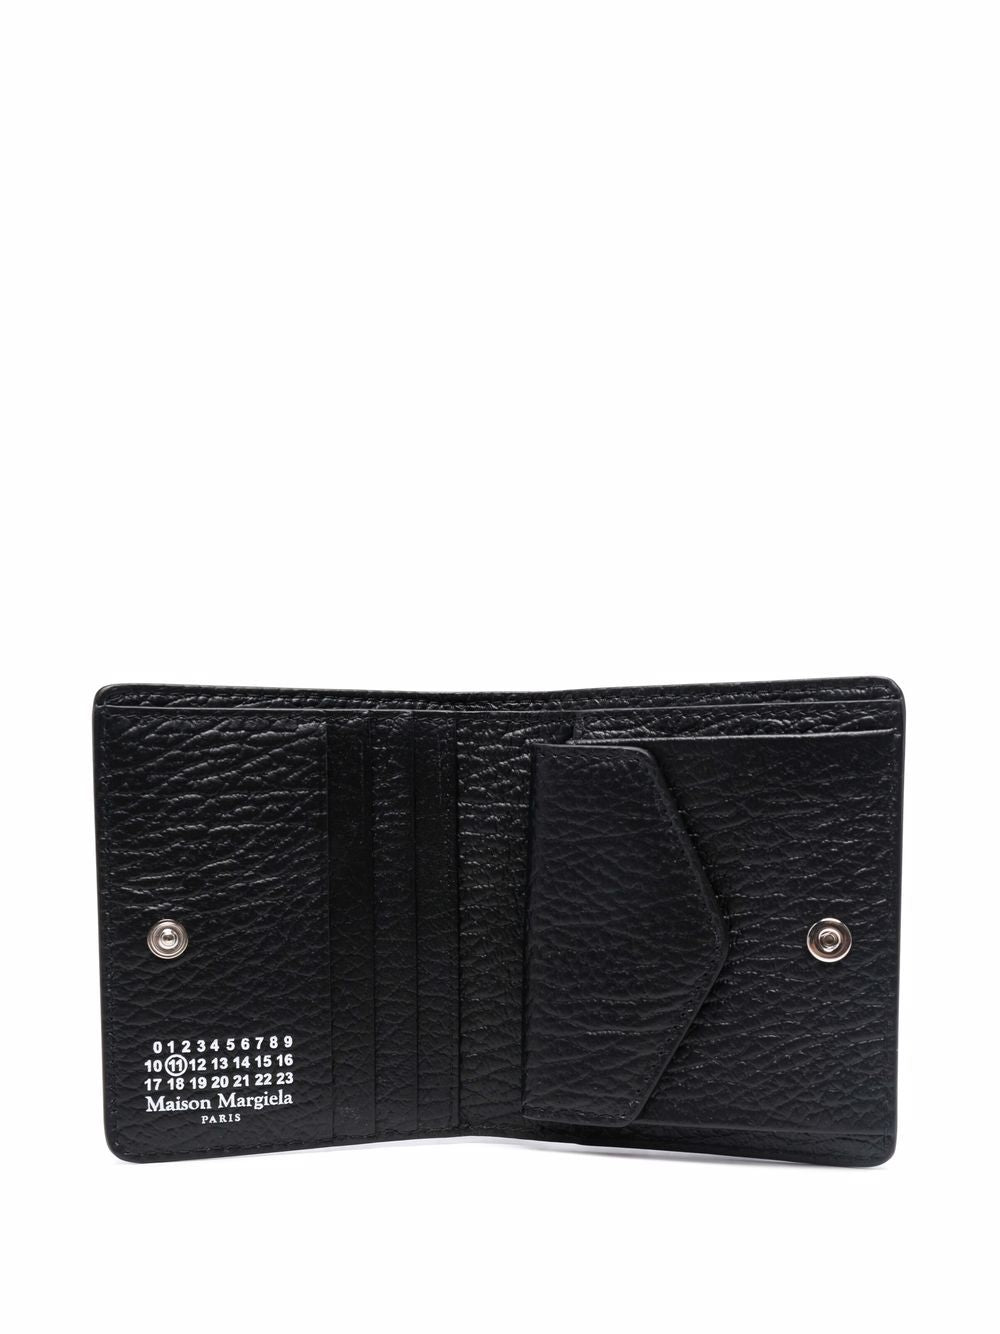 Black Pebbled Leather Bi-fold Wallet for Women